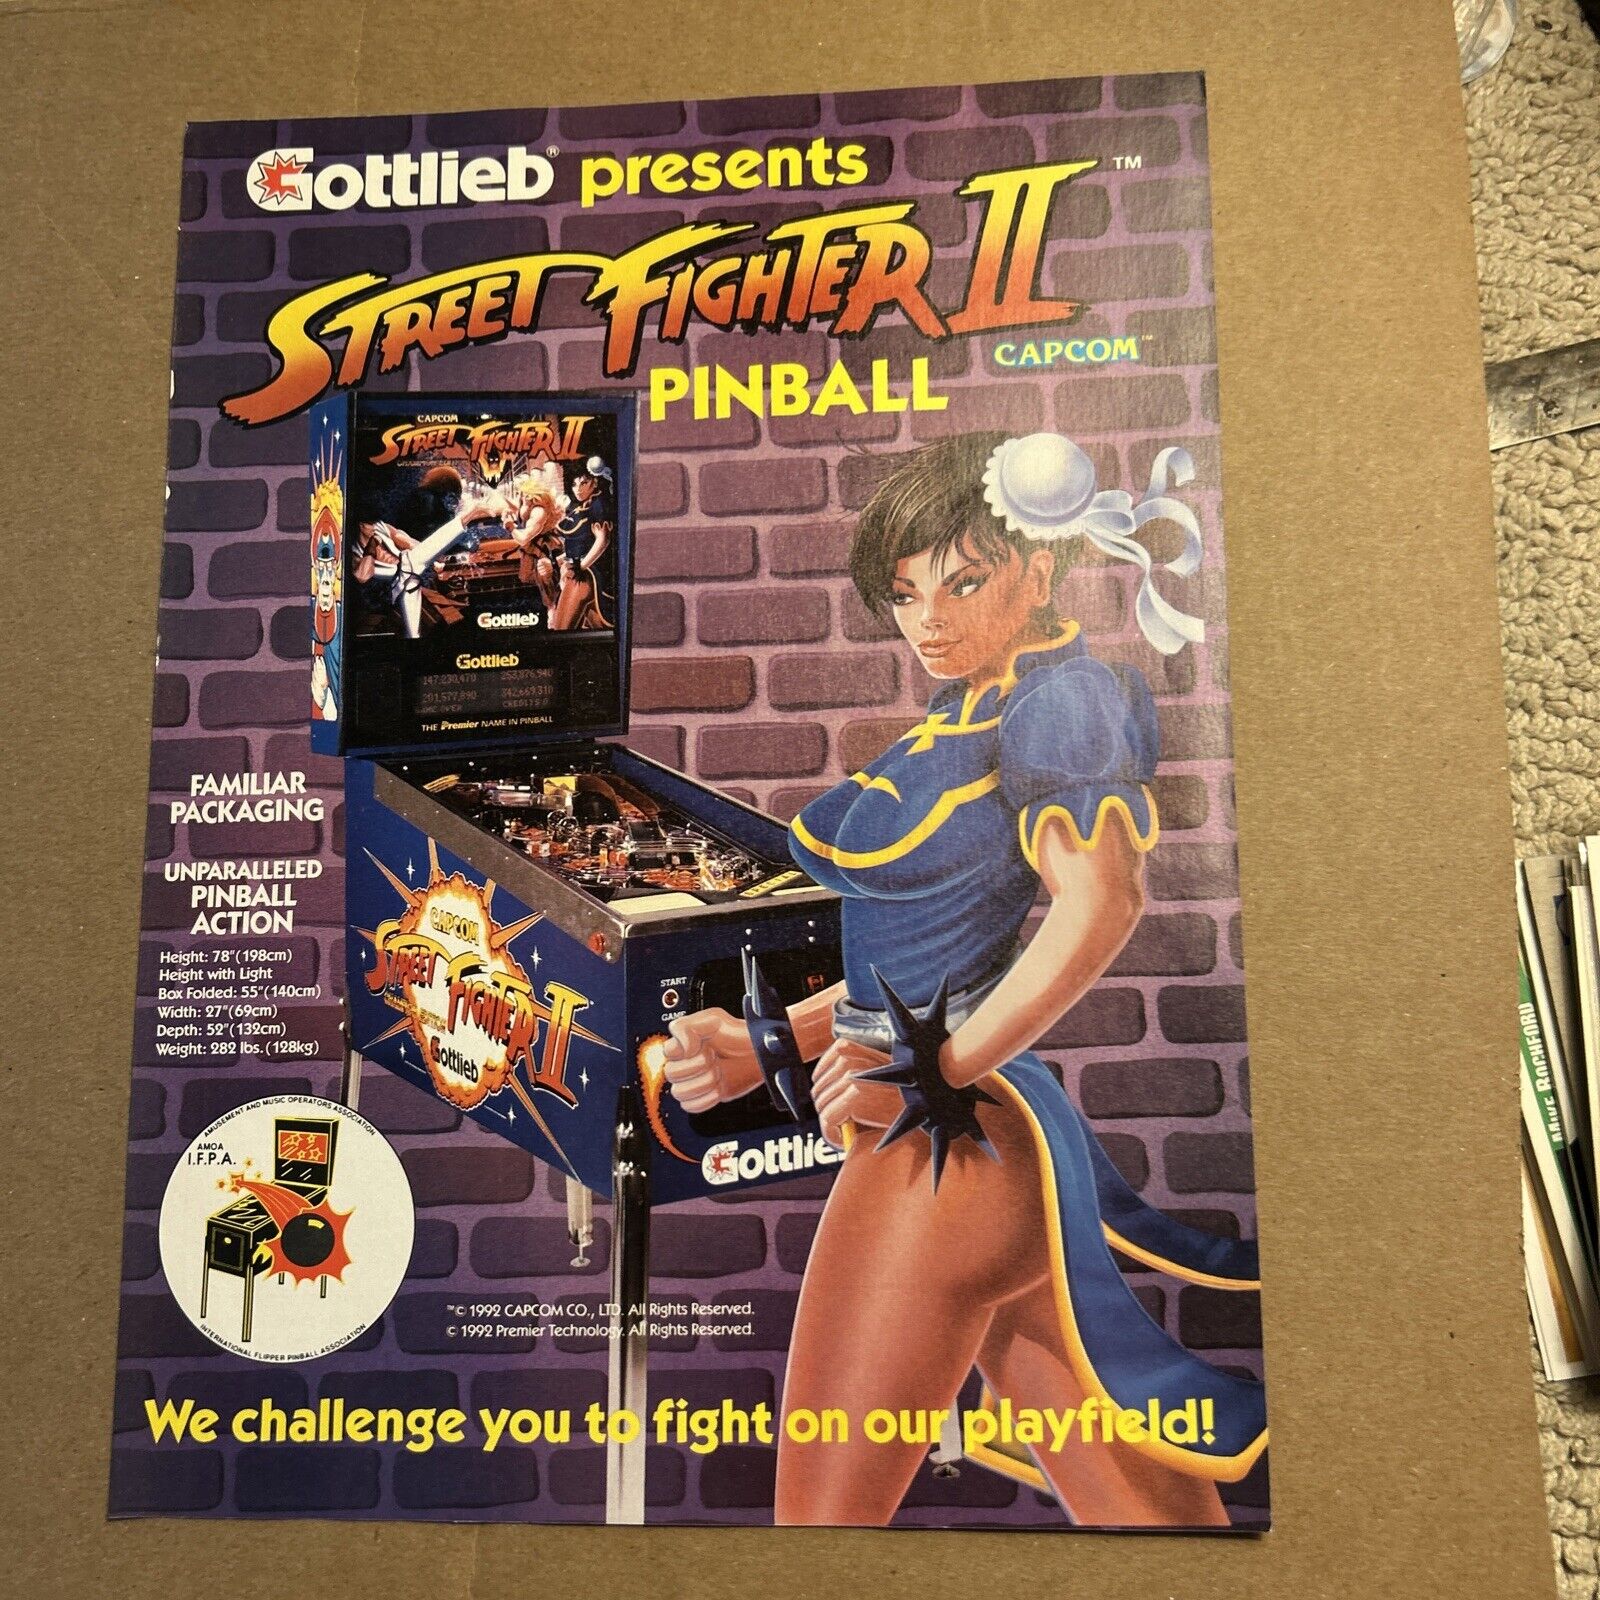 11-8” original 1993 Gottlieb Street fighter 2 pinball arcade game FLYER AD